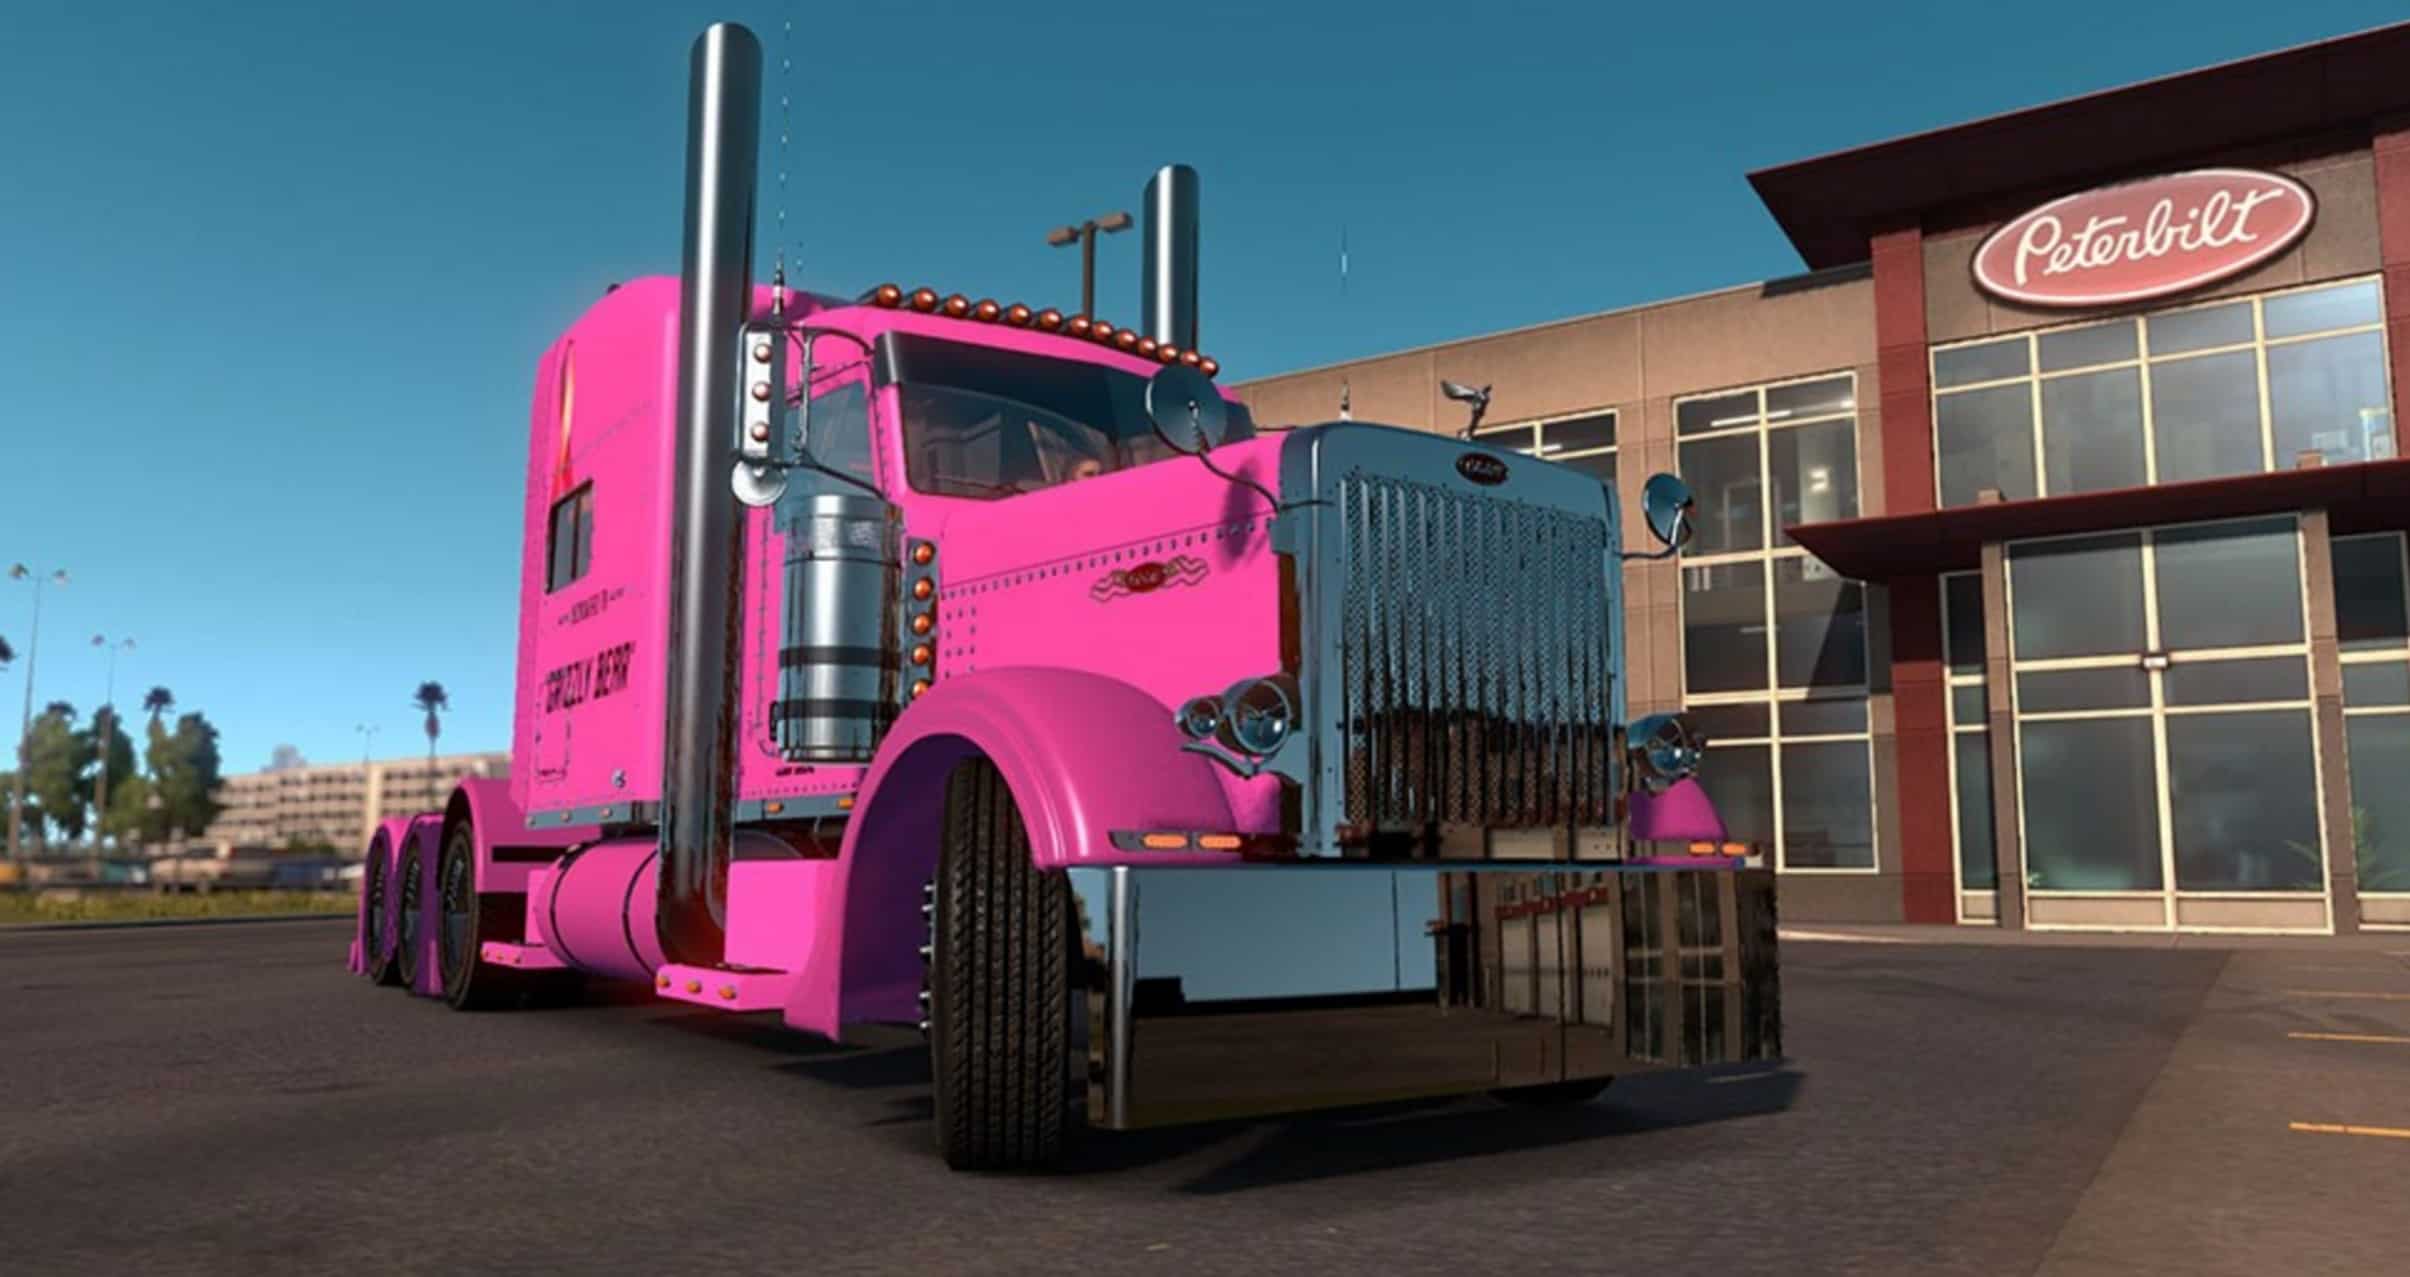 Peterbilt Pooh Bear for Cancer Skin Mod  American Truck Simulator mod  ATS mod